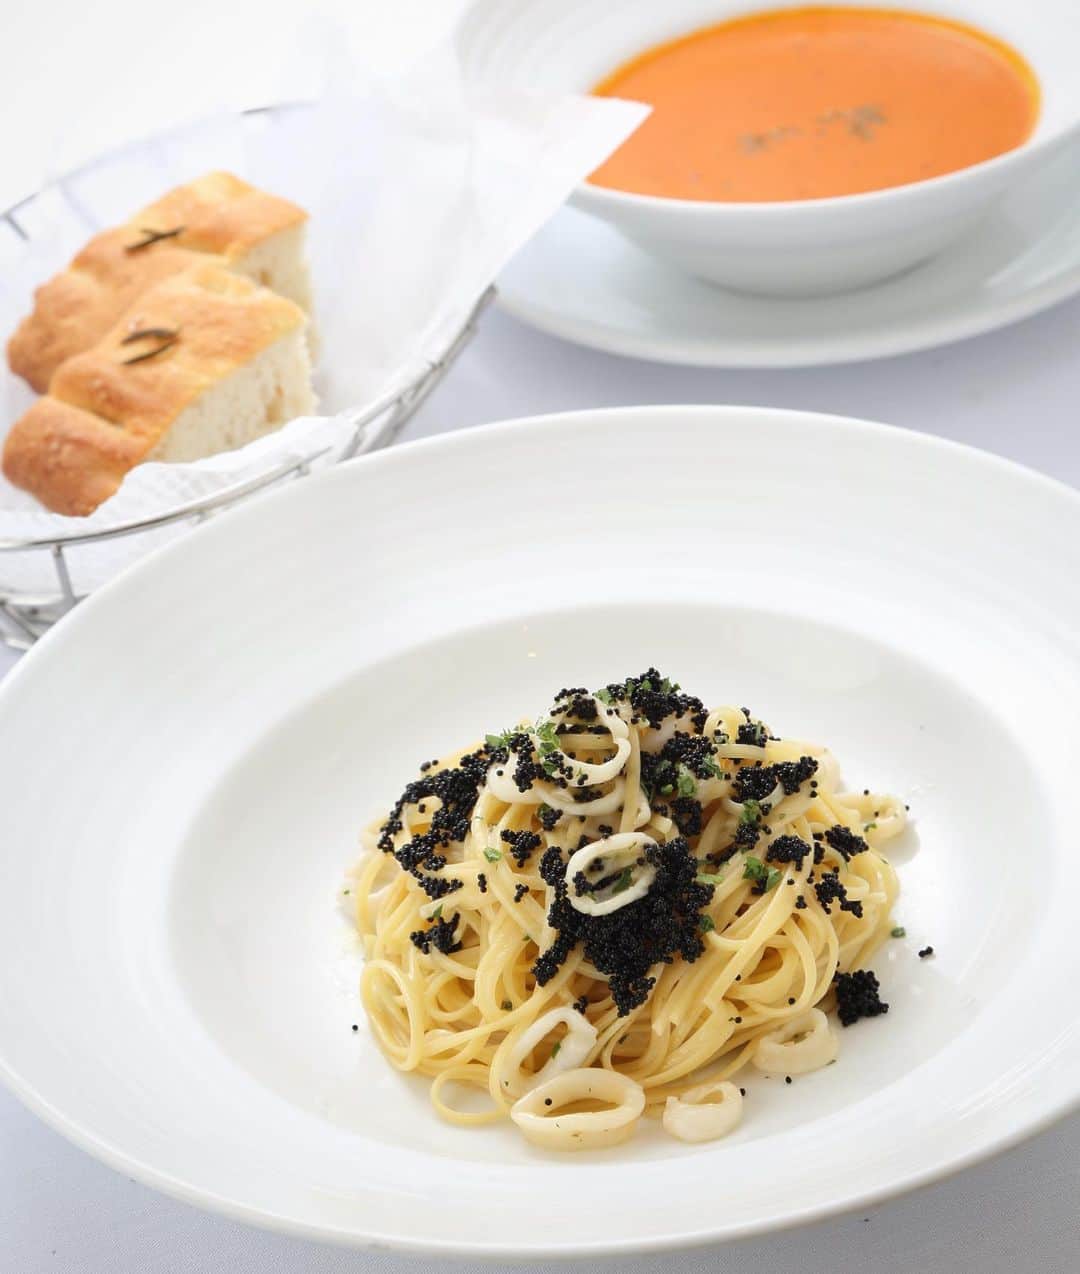 Arancino Di Mareのインスタグラム：「Have you tried our Spaghetti Tobiko & Calamari with garlic olive oil sauce? One of our unique dishes at @arancinodimare! #arancinodimare #arancino #italian #tobiko #arancinodimare #foodies #calamari #oliveoil #buzzfeedfood #pasta #waikiki #kamaaina #italia #111hawaiiaward #supportlocal #アランチーノディマーレ #アランチーノ #イタリアン #パスタ #ハワイ #おいしい #ホノルル #ハワイ大好き #haleainaawards #ハワイ旅行 #hawaii #hawaiisbestkitchens #frolichawaii #locals #hawaiistrong」